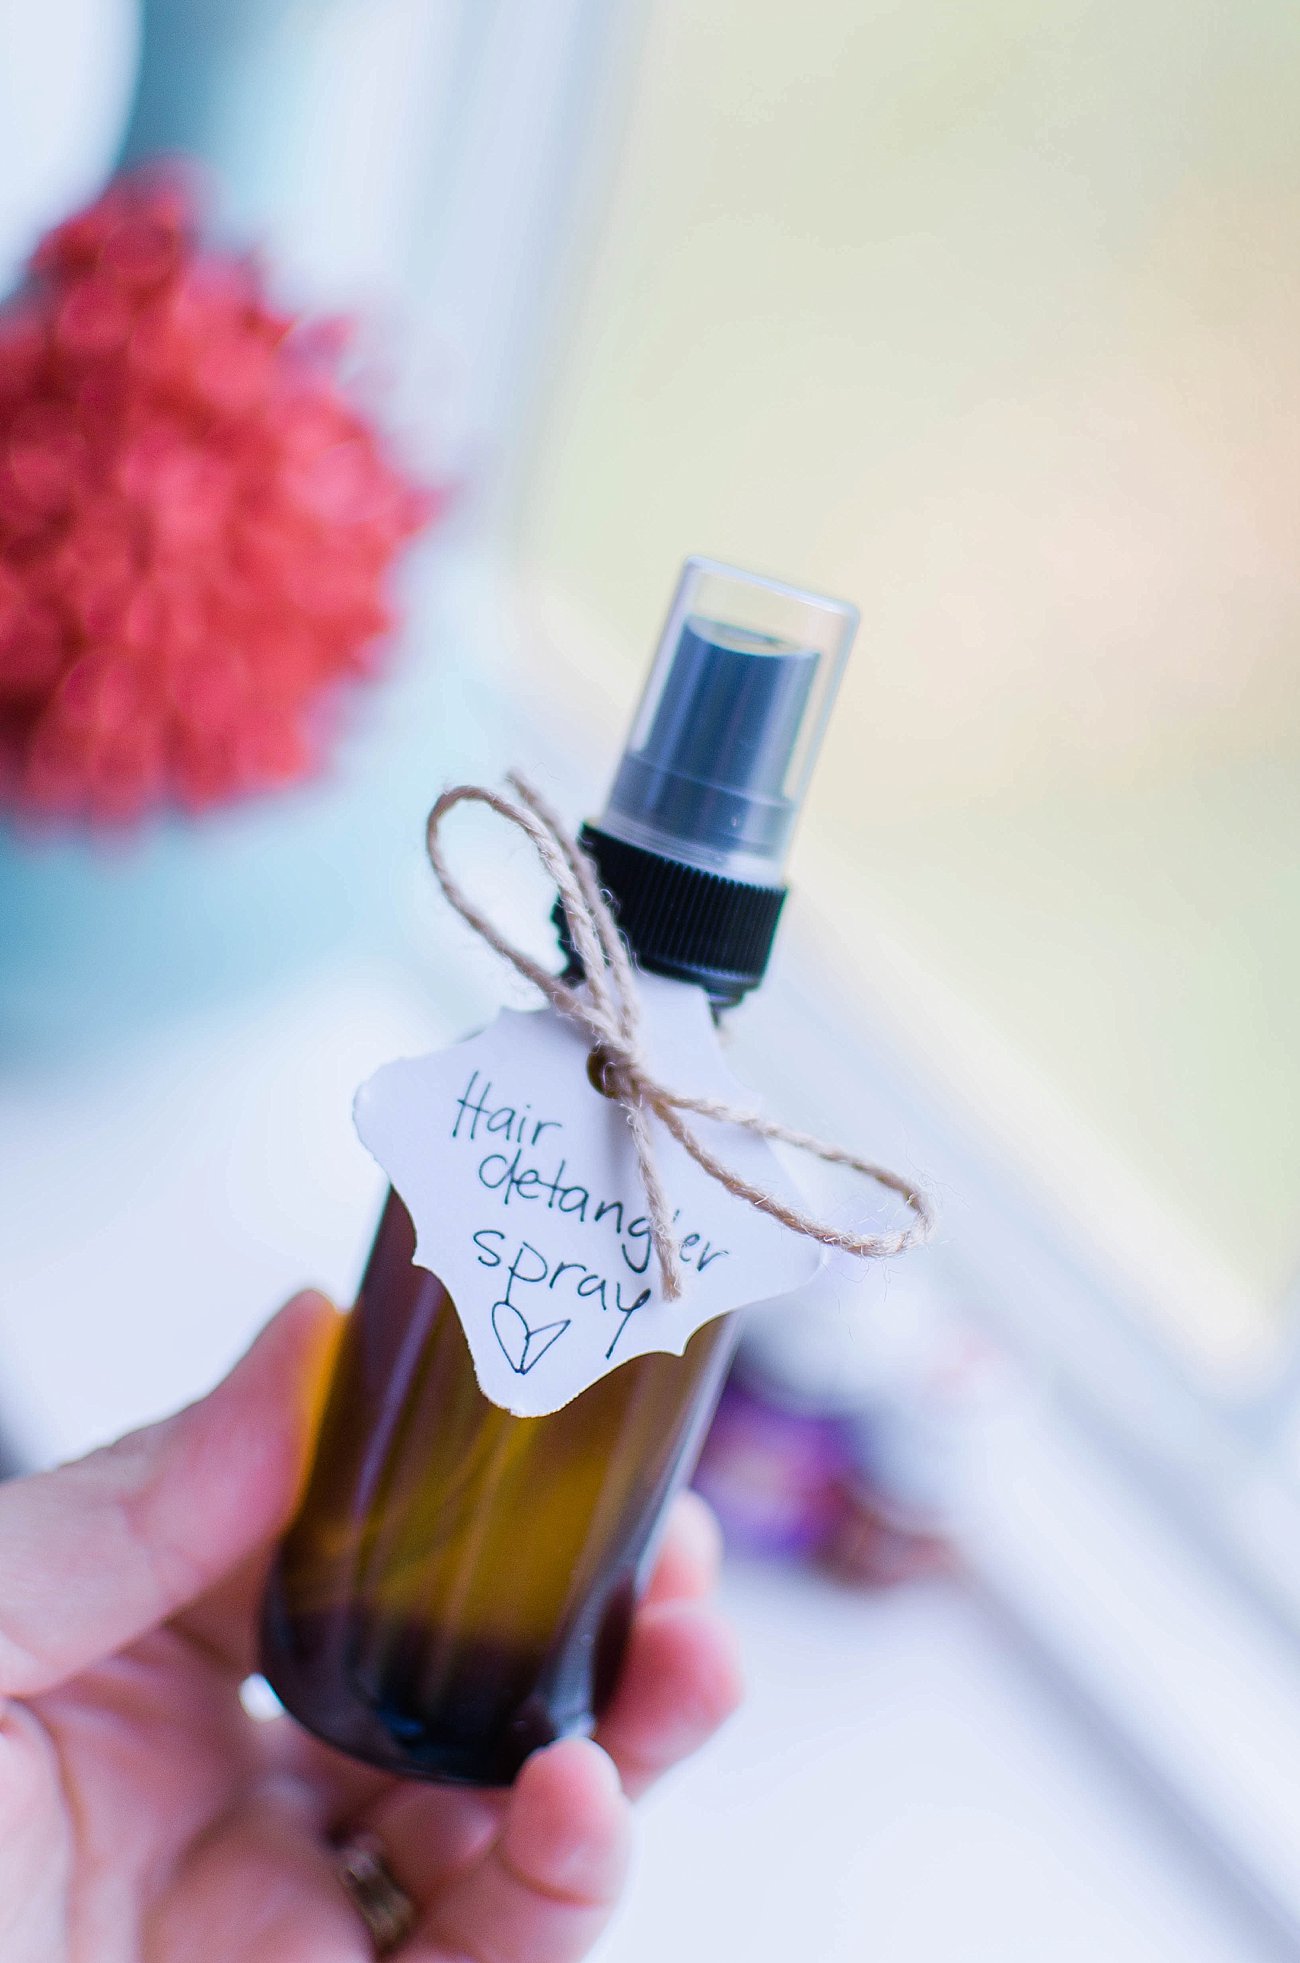 DIY Non-Toxic Hair Detangler Spray with Lavender, Orange, Rosemary, and Cedarwood essential oils (1)